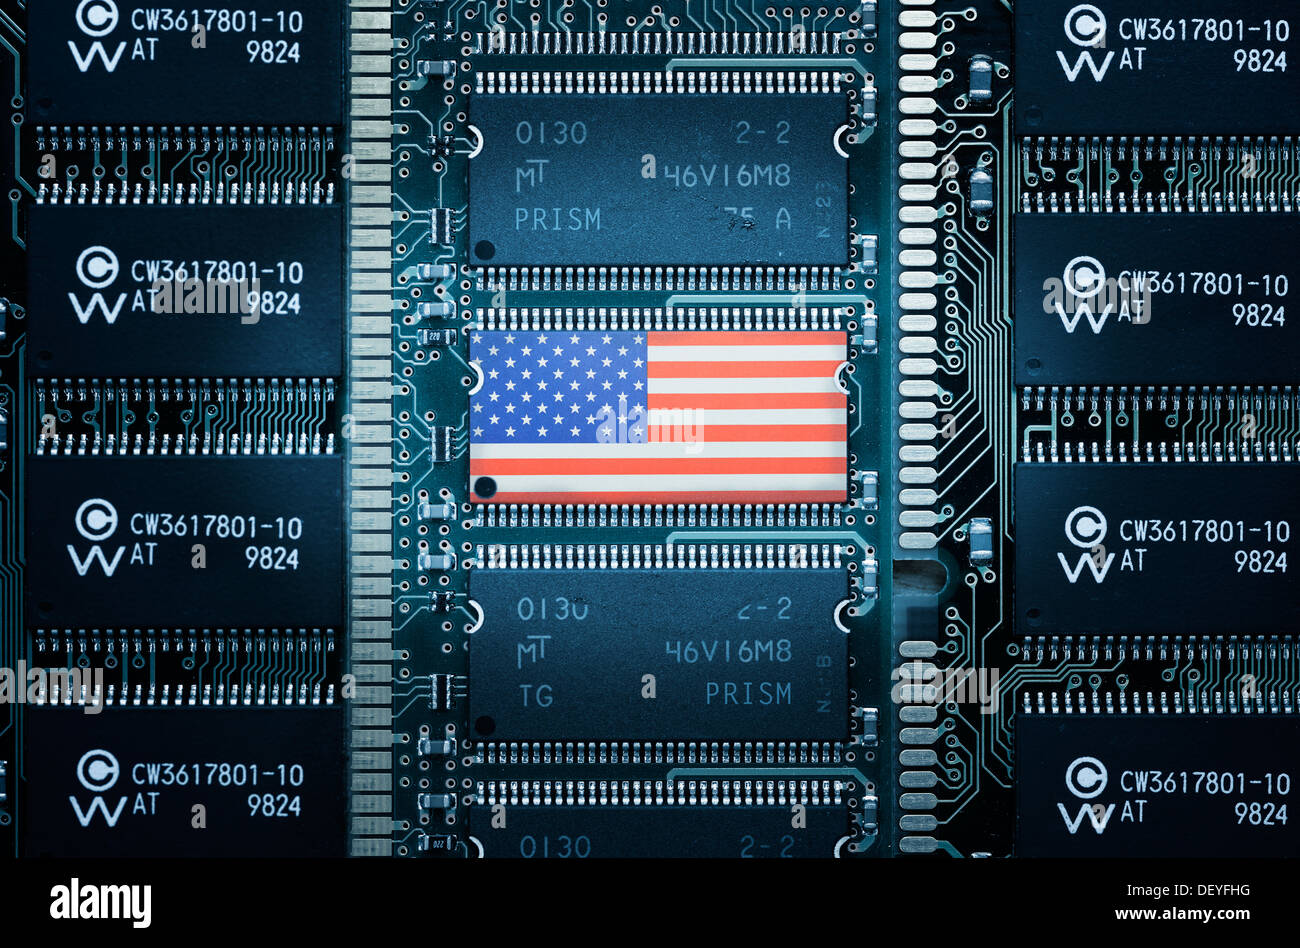 Bandiera degli Stati Uniti sul computer Platinum, Prism Spaehprogramm, USA-Fahne auf Computerplatine, Spähprogramm Prisma Foto Stock